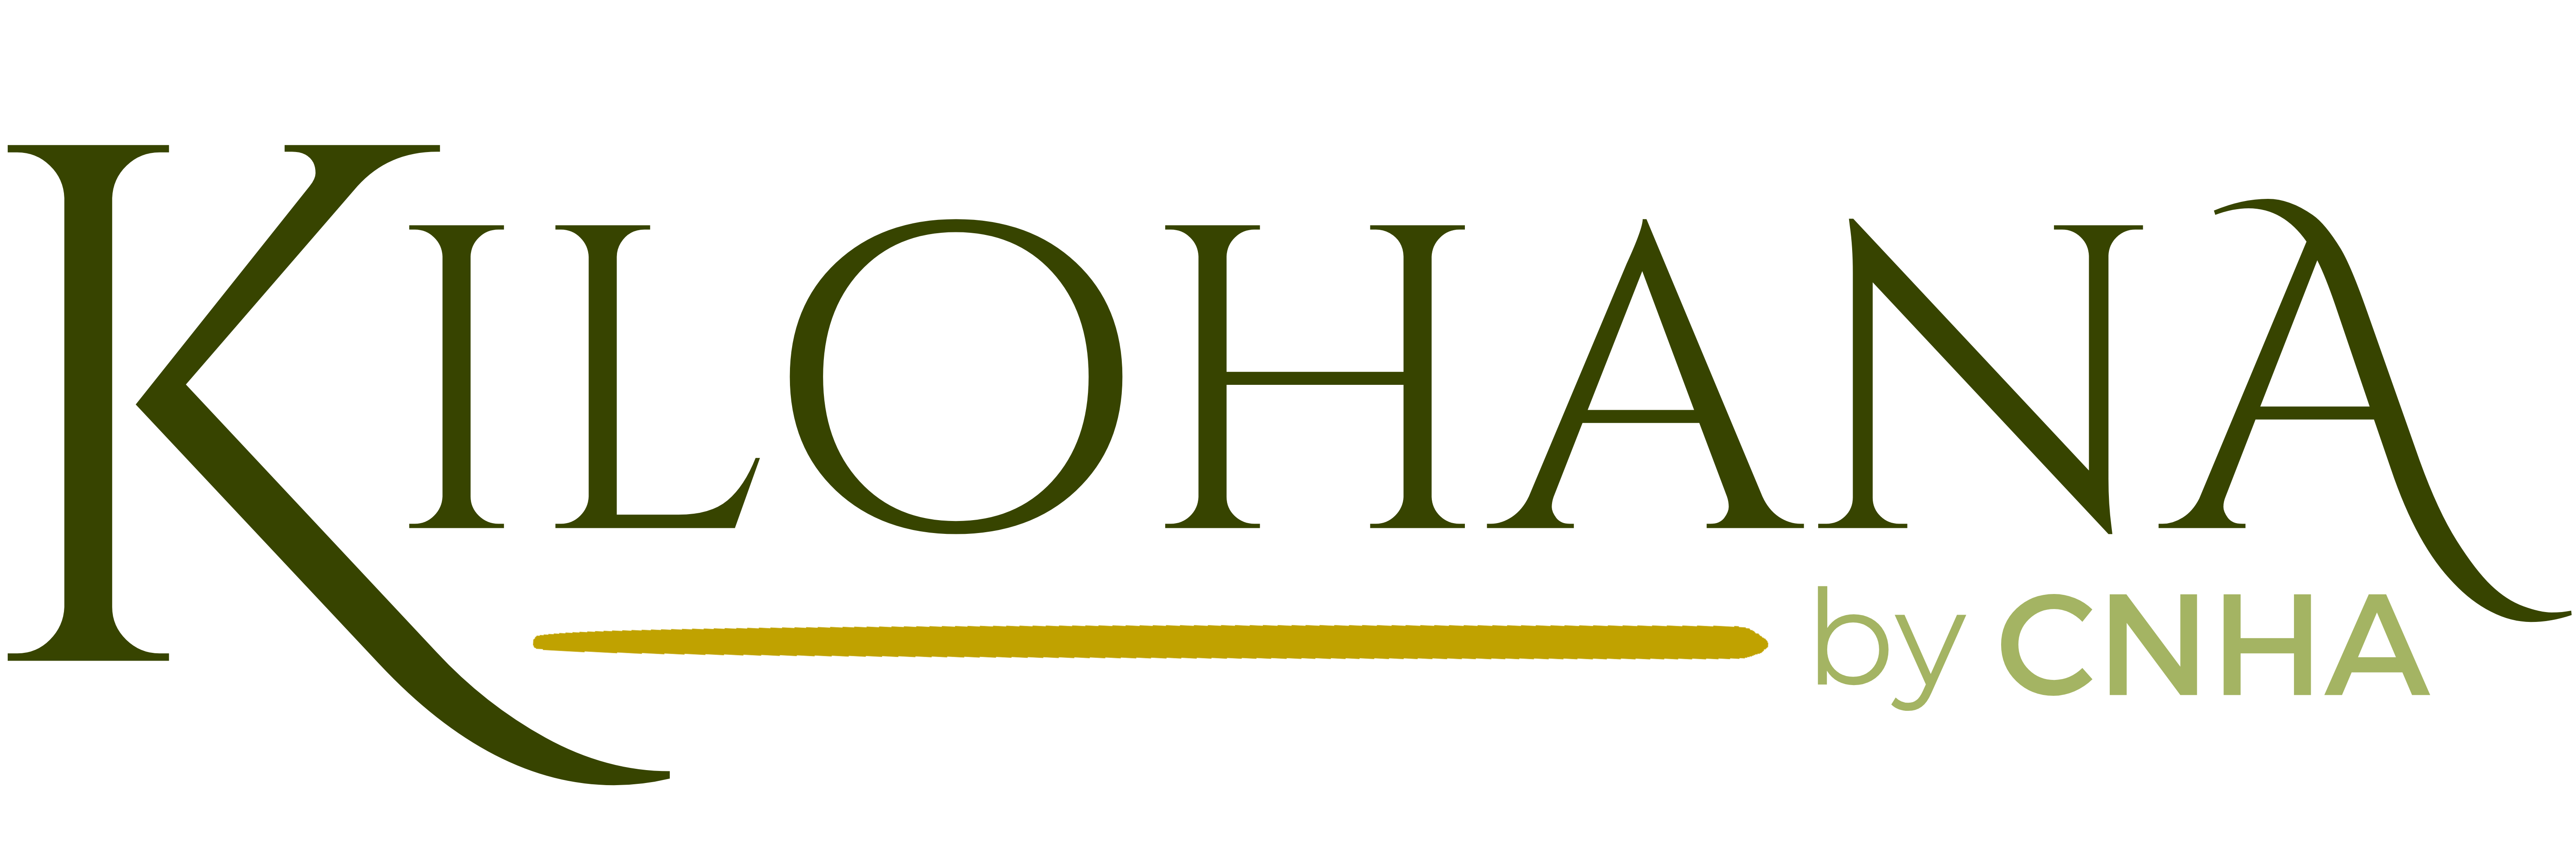 LOGO: Kilohana Logo - Dark Color